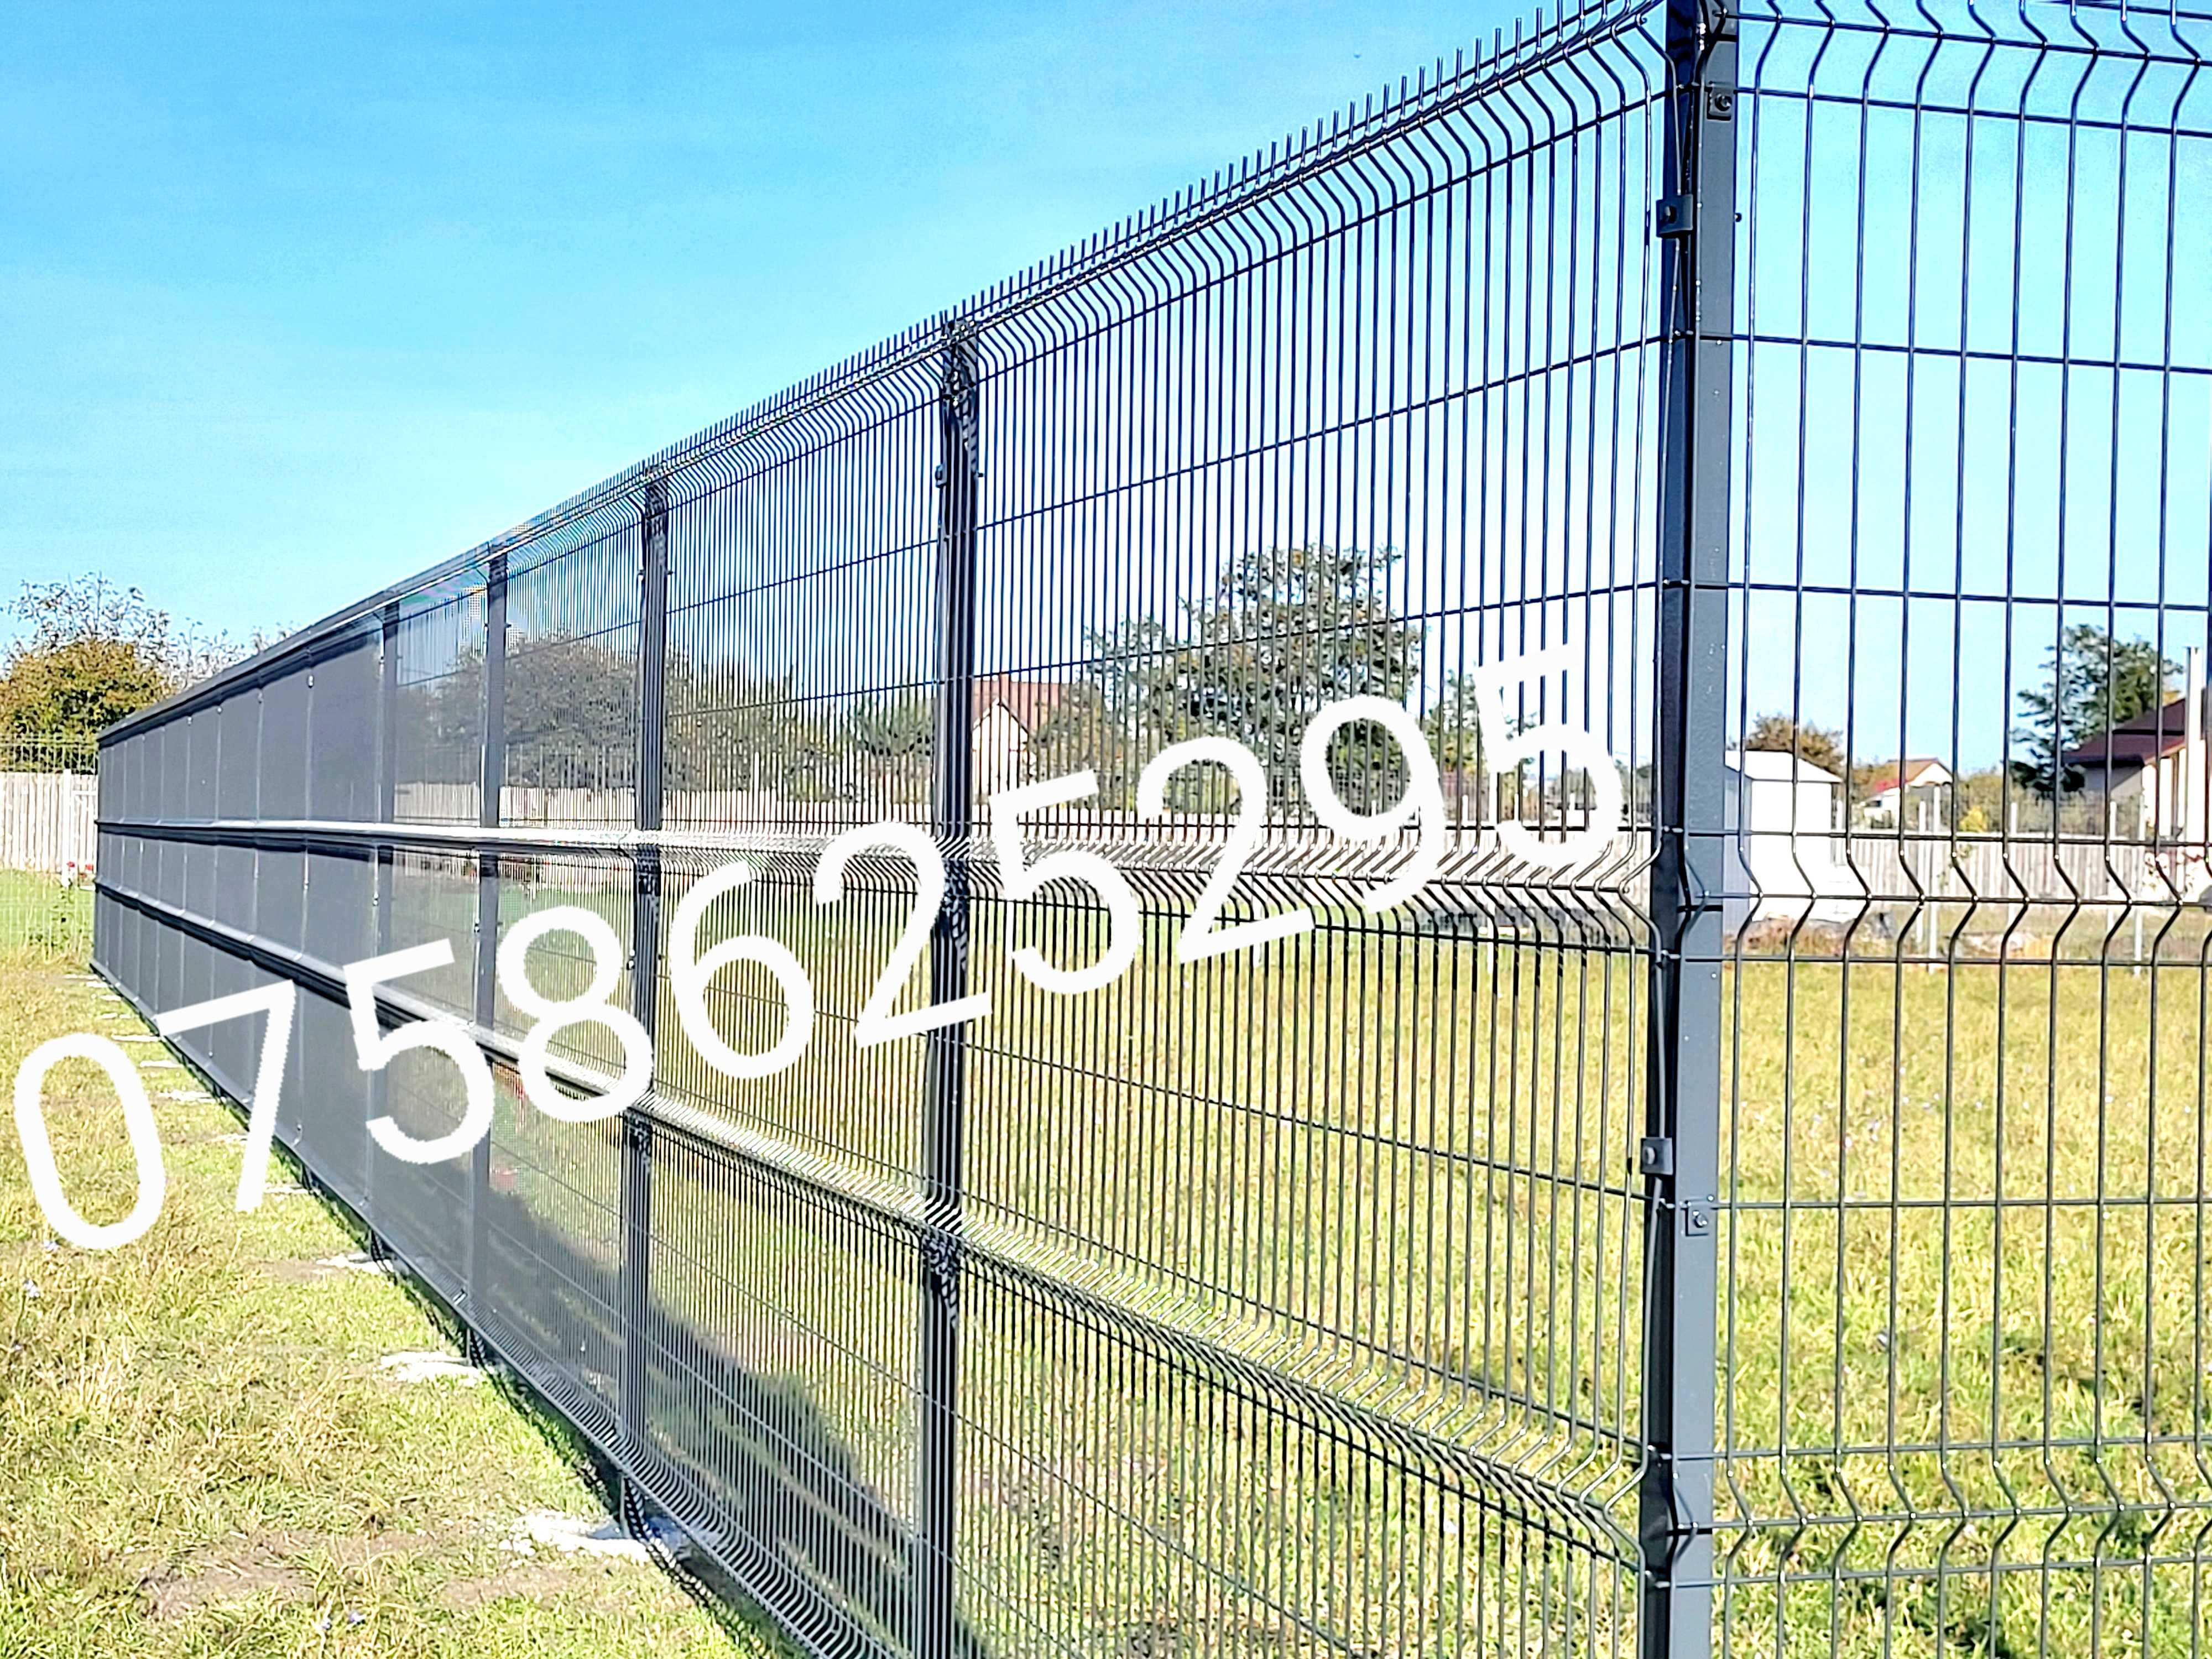 Gard din plasa /gard zincat / gard verde/ solutii de imprejmuire